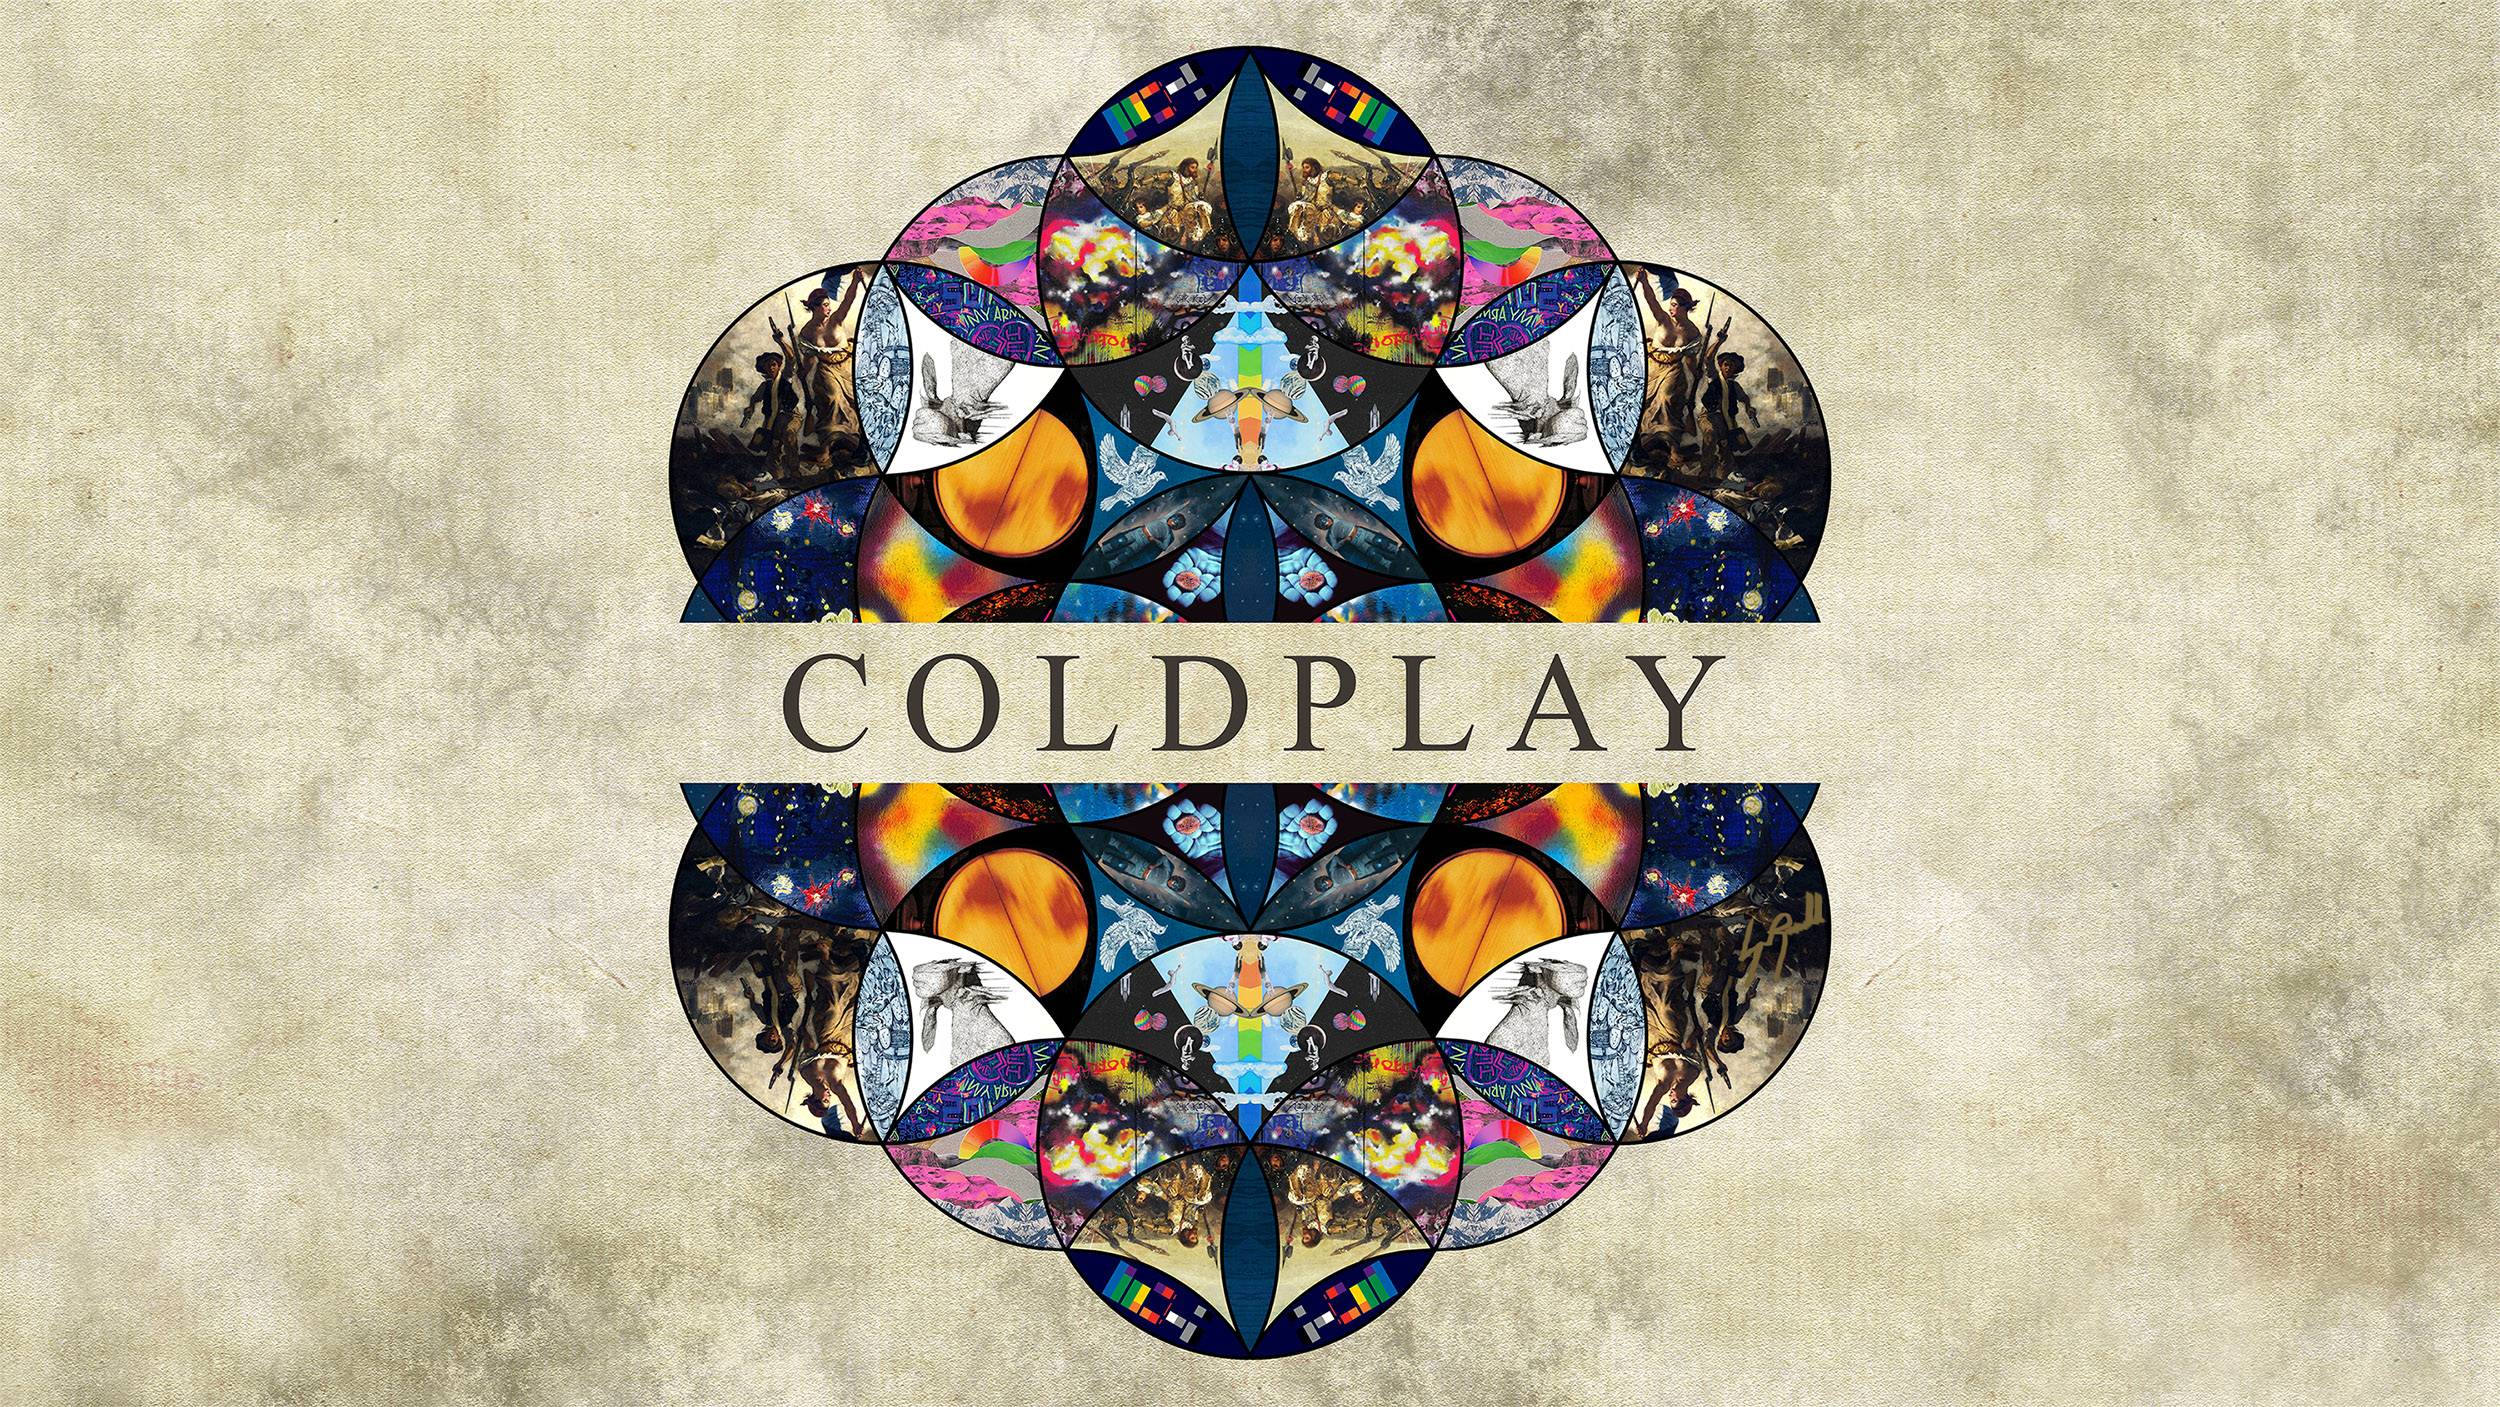 Fondos de pantalla de Coldplay - FondosMil